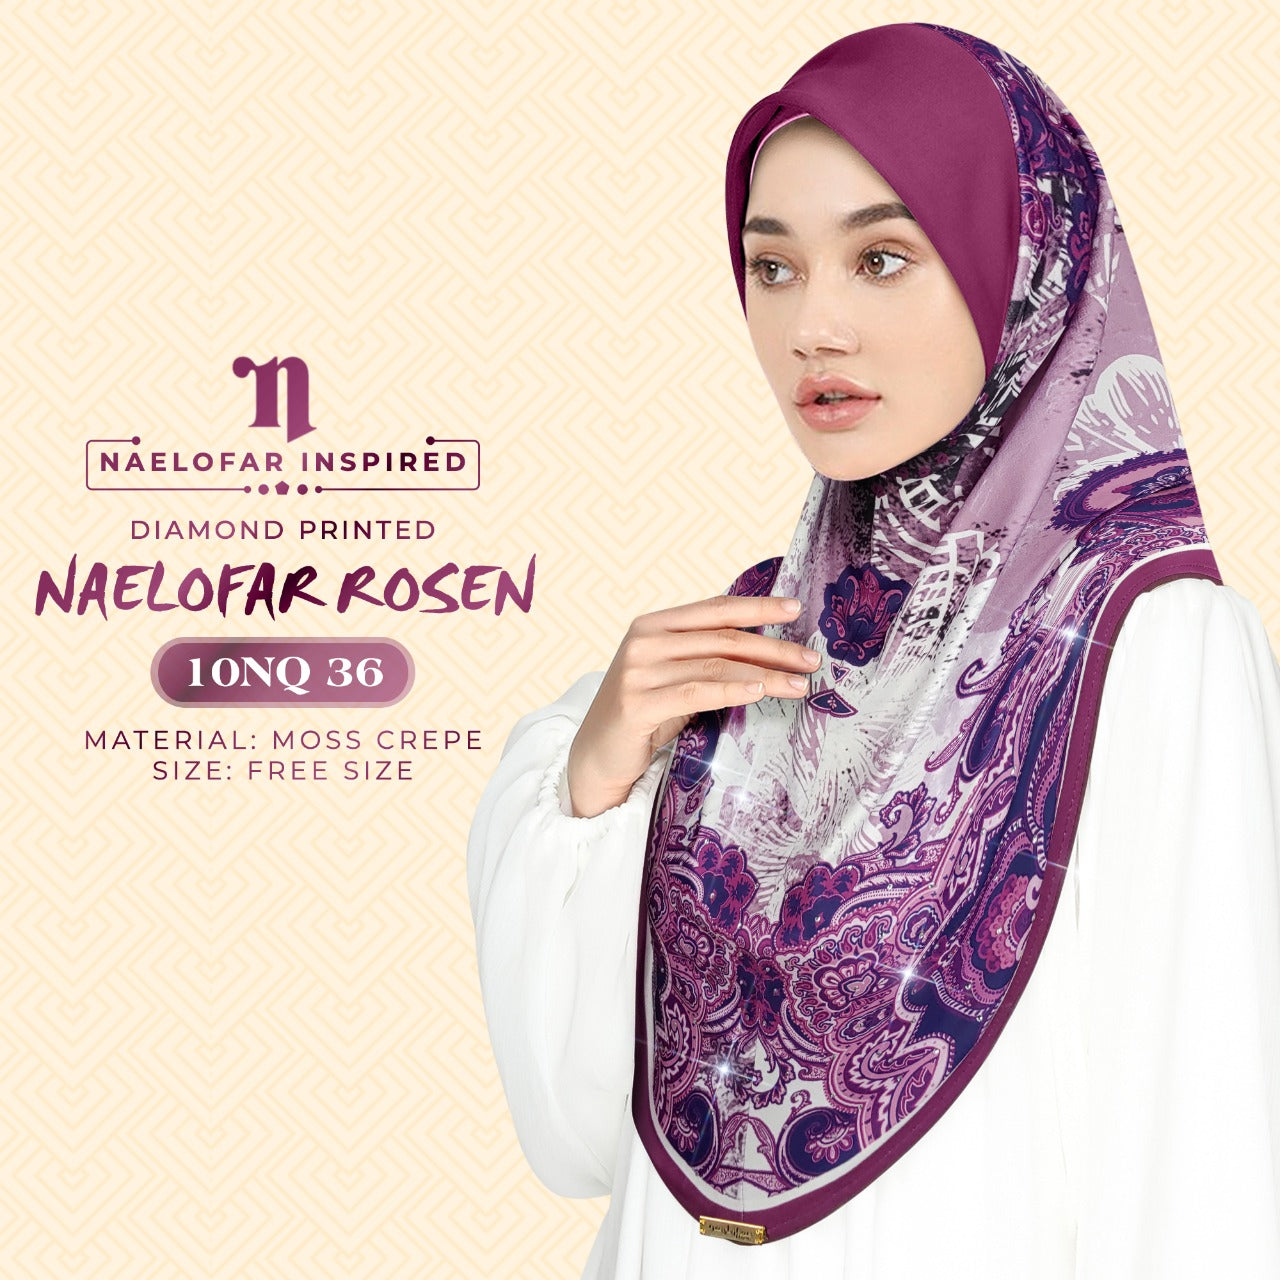 Naelofar Instant Printed Rosen Diamond Collection RM12